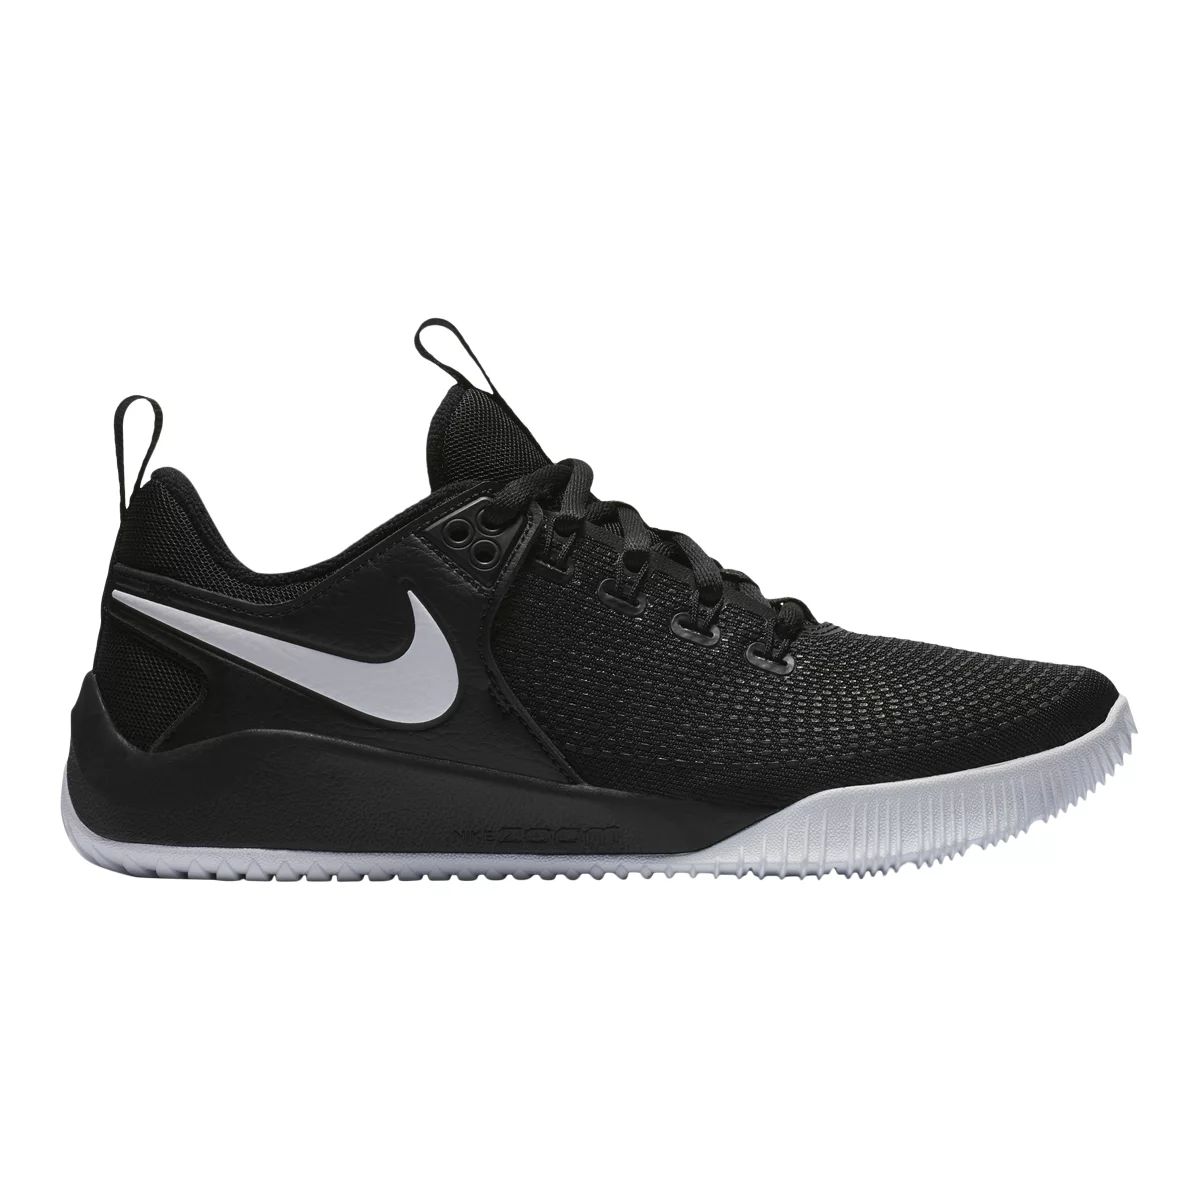 Image of Nike Men's Zoom Hyperace 2 Indoor Court Volleyball Shoes Low Top Tennis Badminton